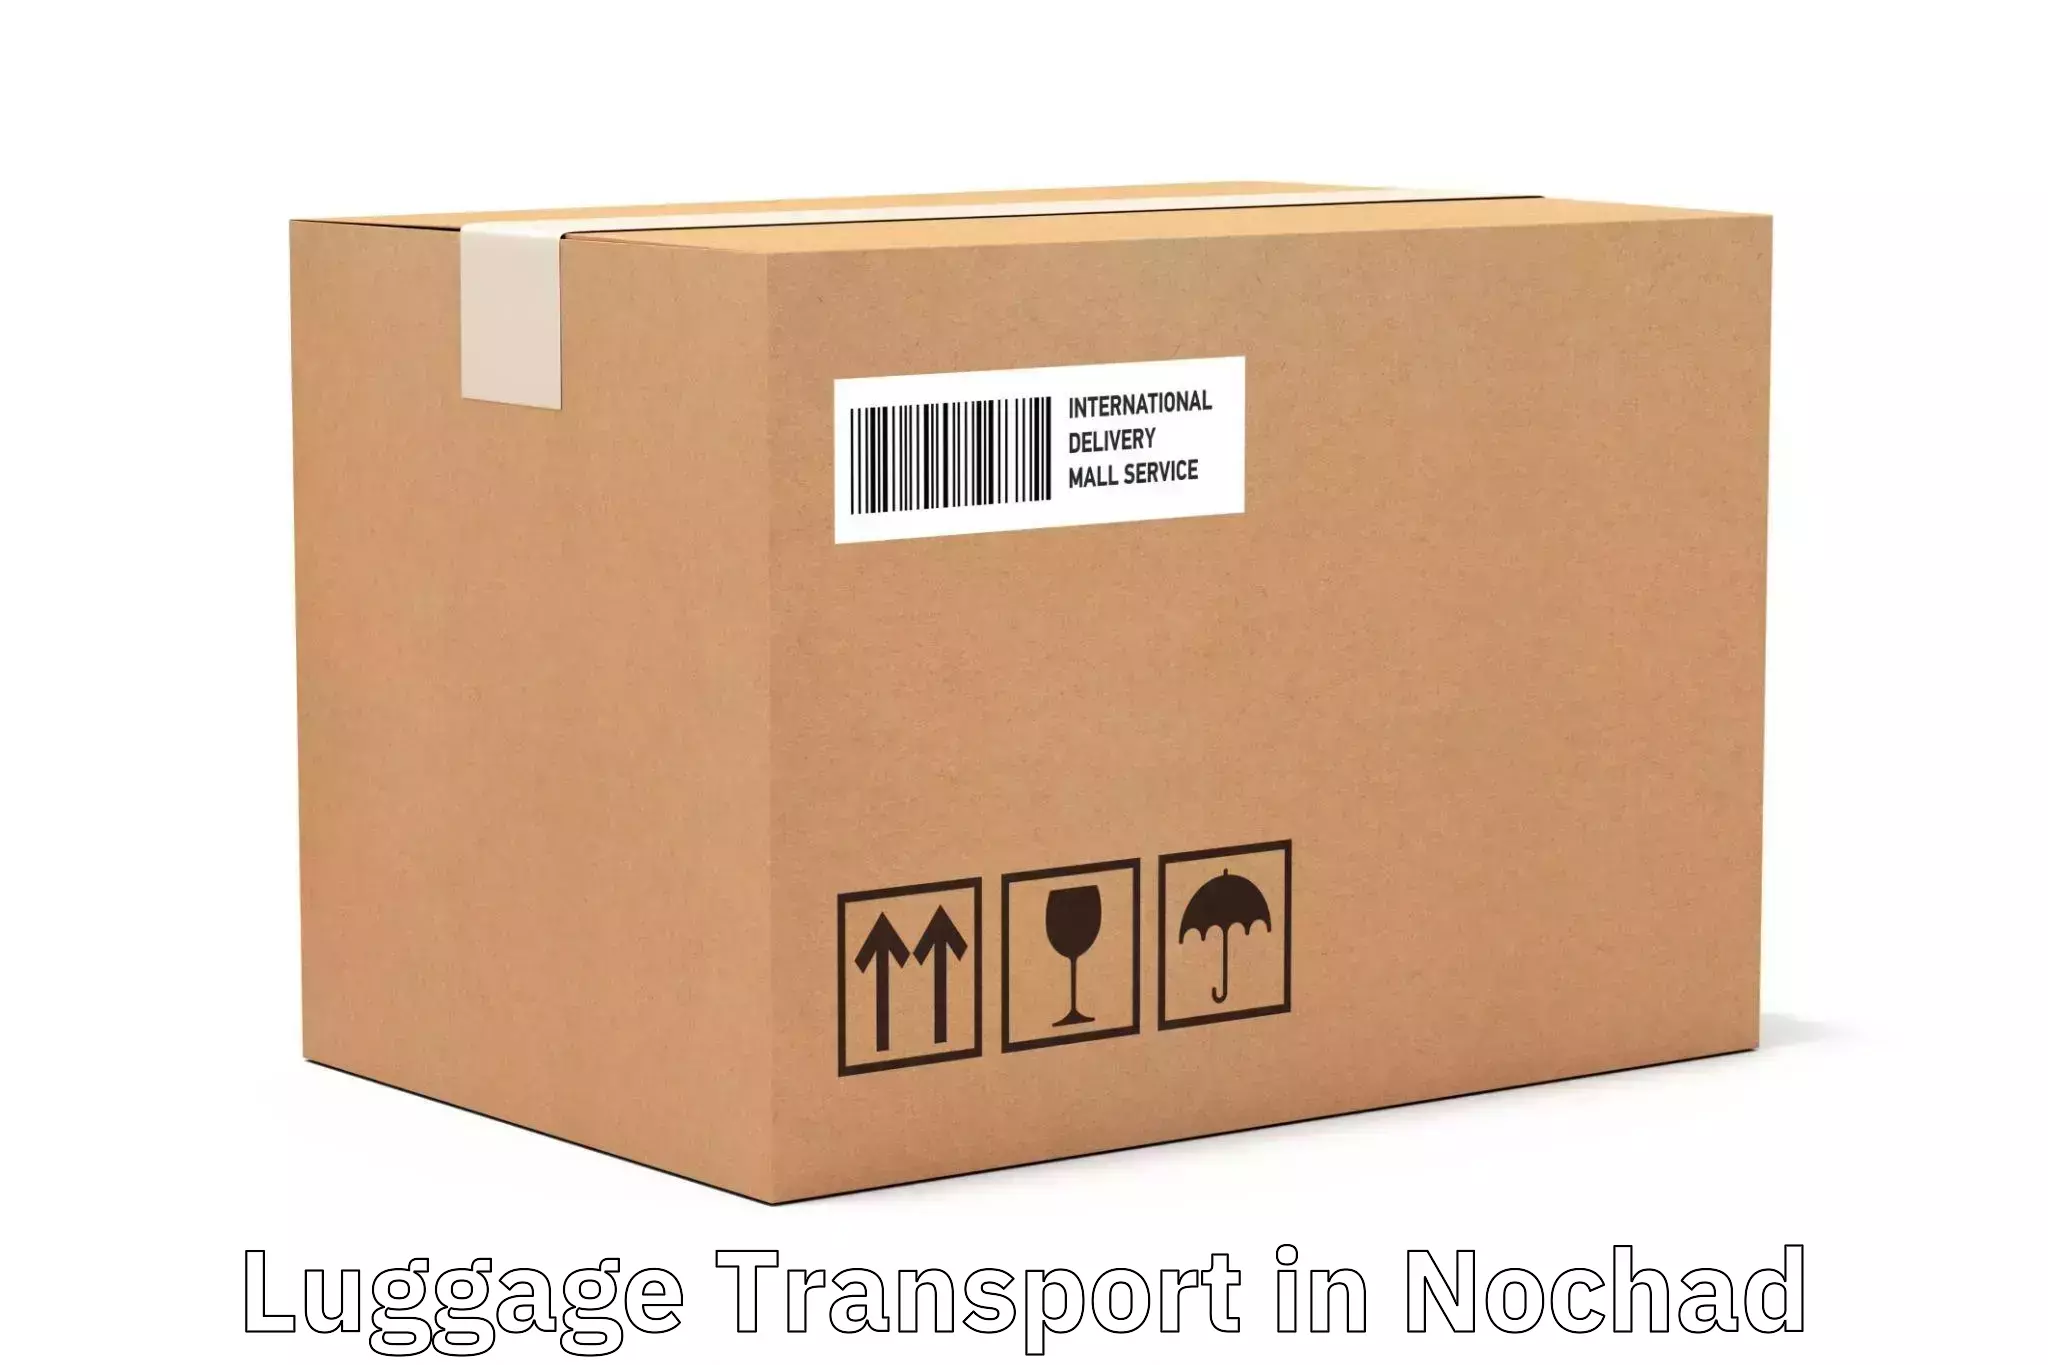 Luggage shipment tracking in Nochad